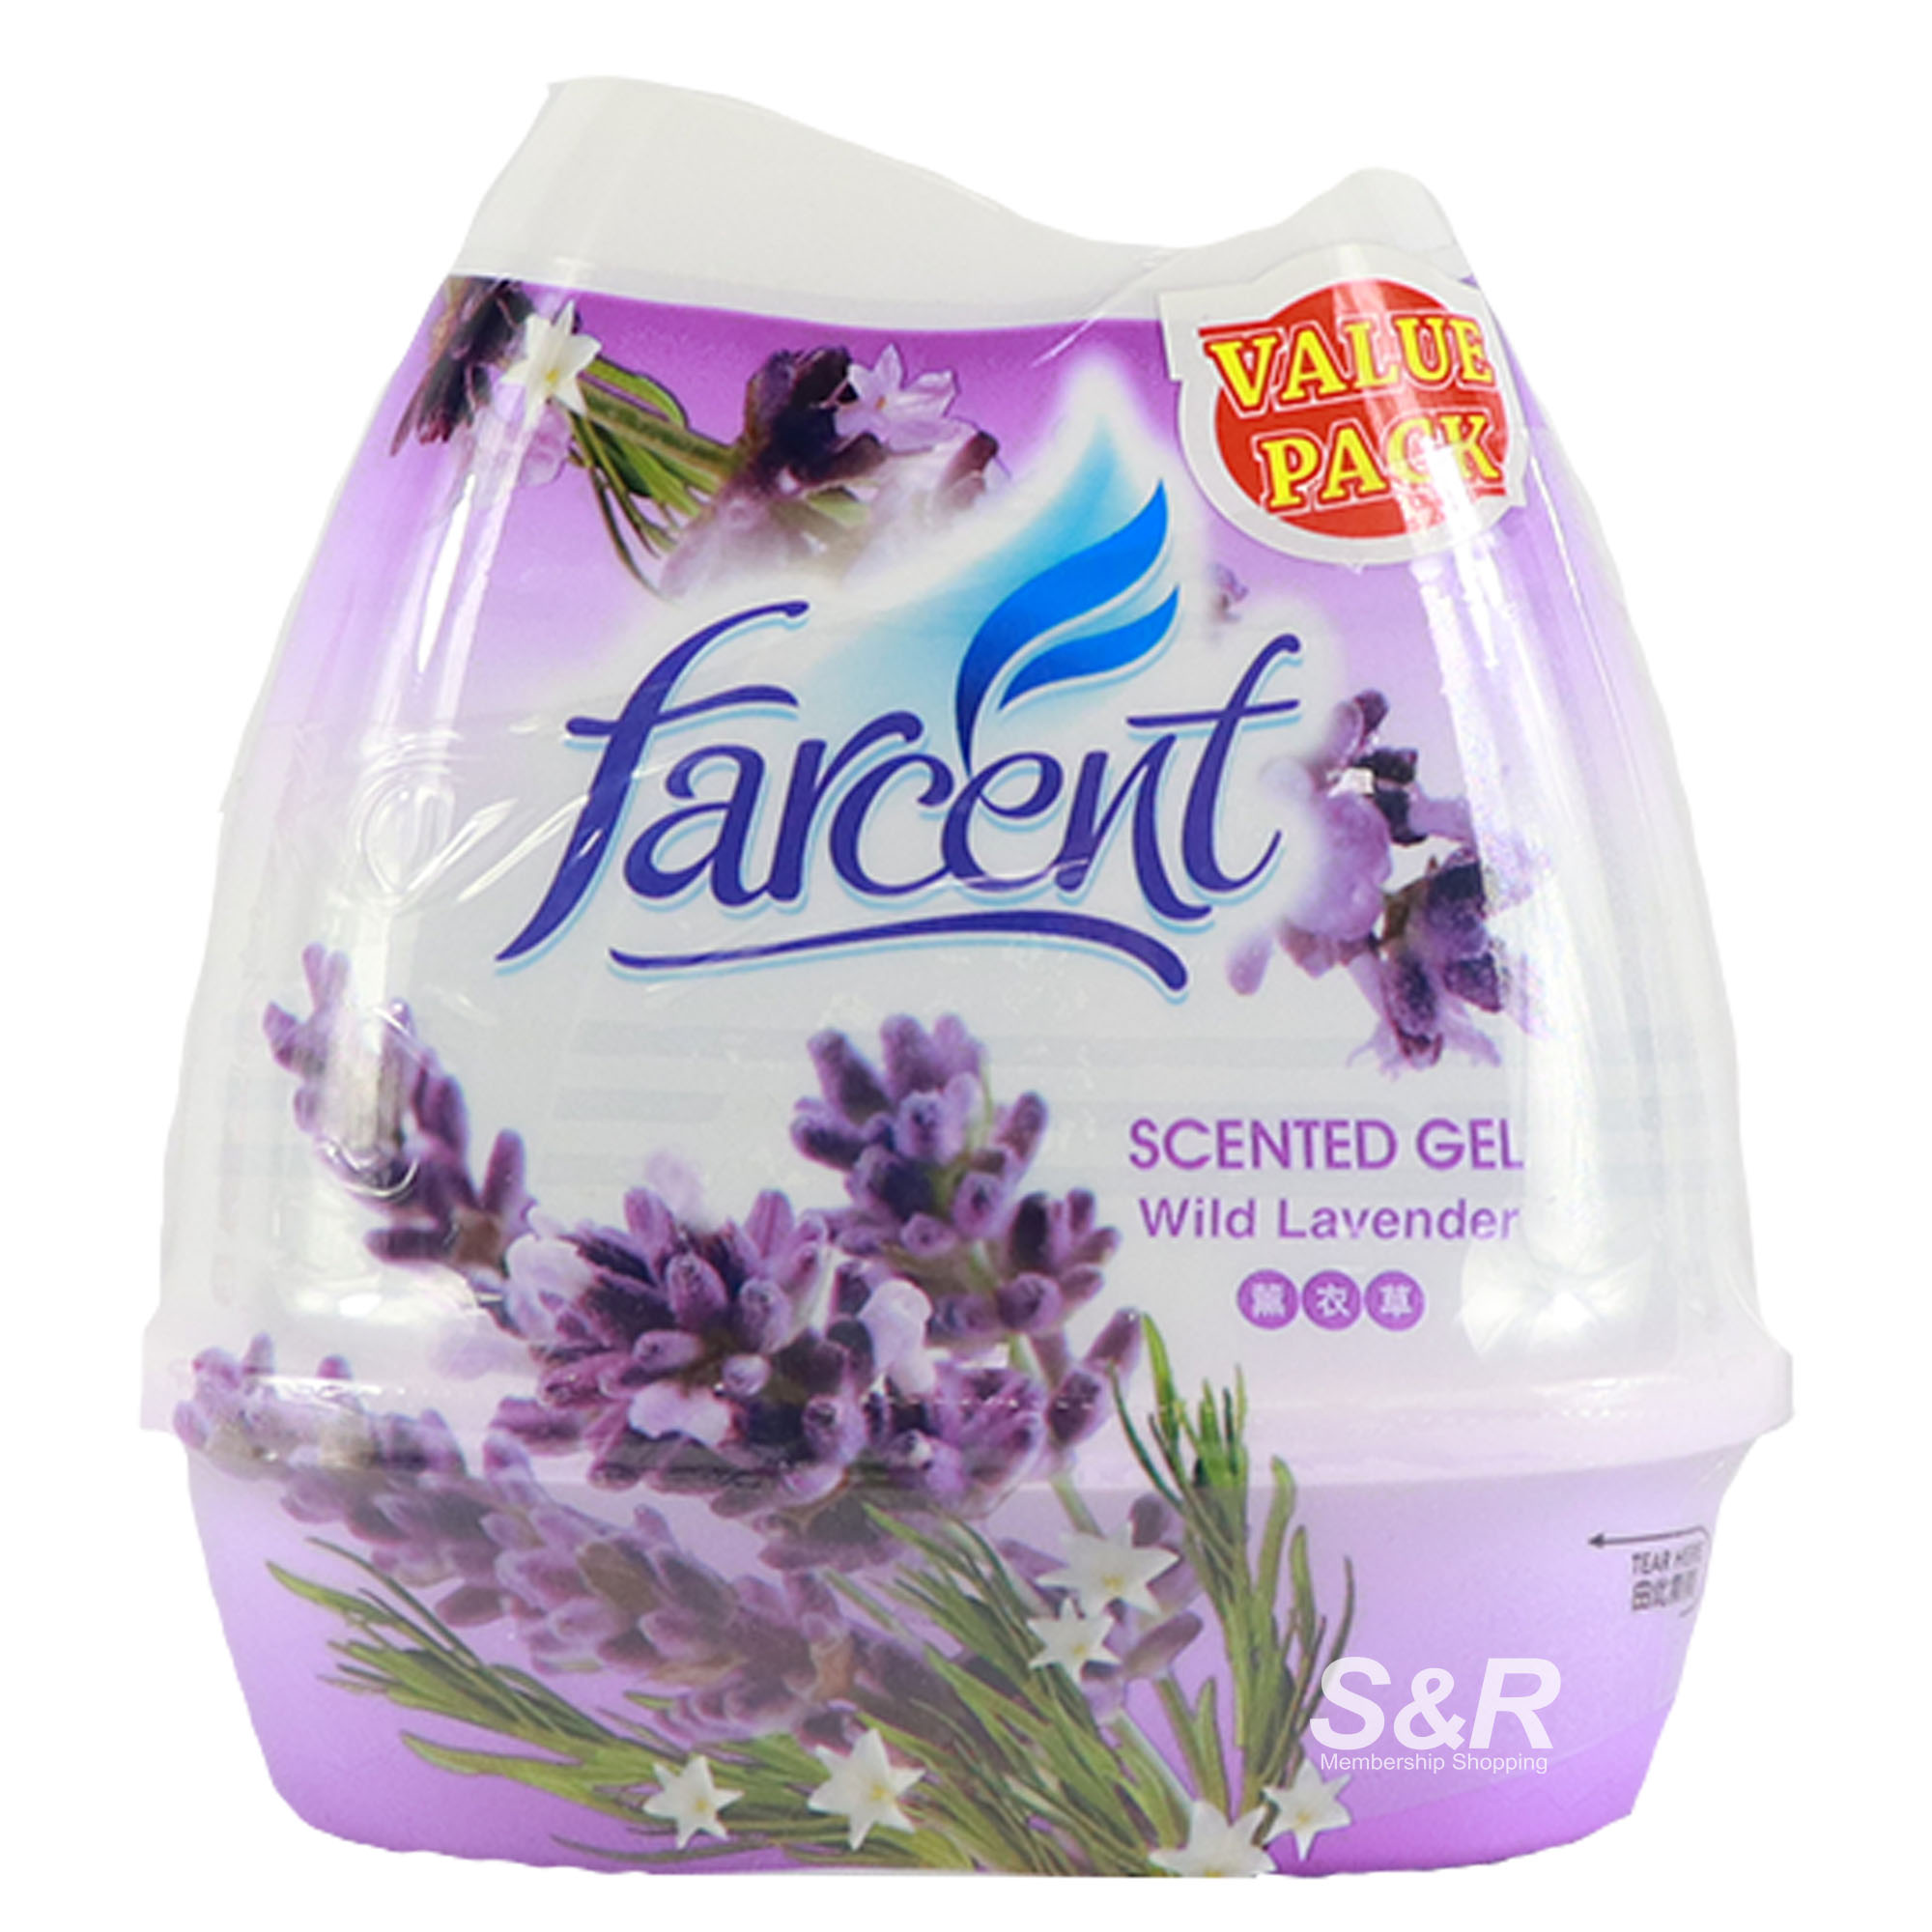 Farcent Scented Gel Wild Lavender 2pcs